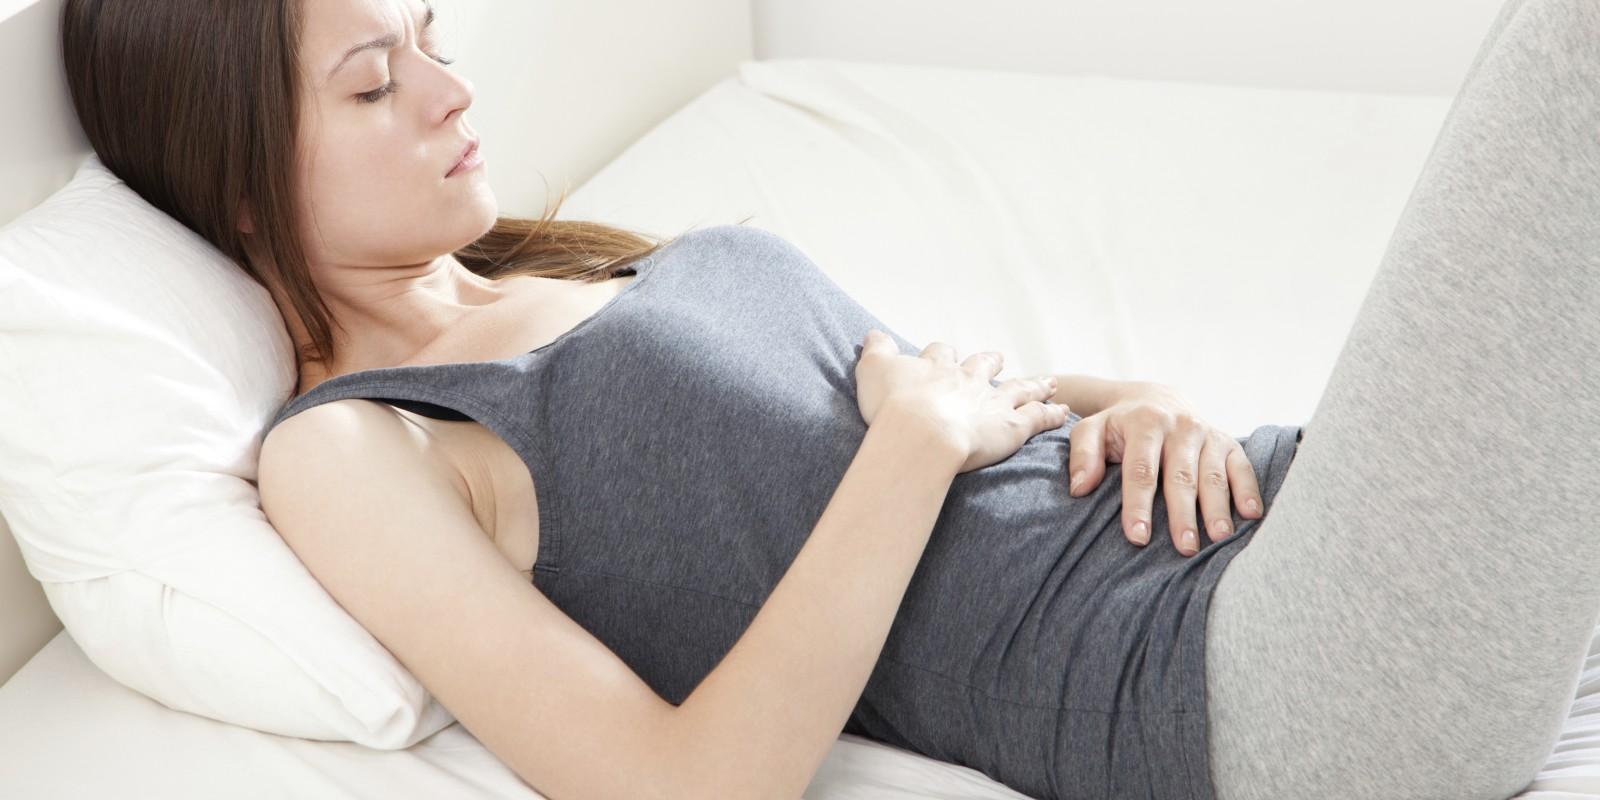 напрягается живот при беременности во время оргазма фото 55